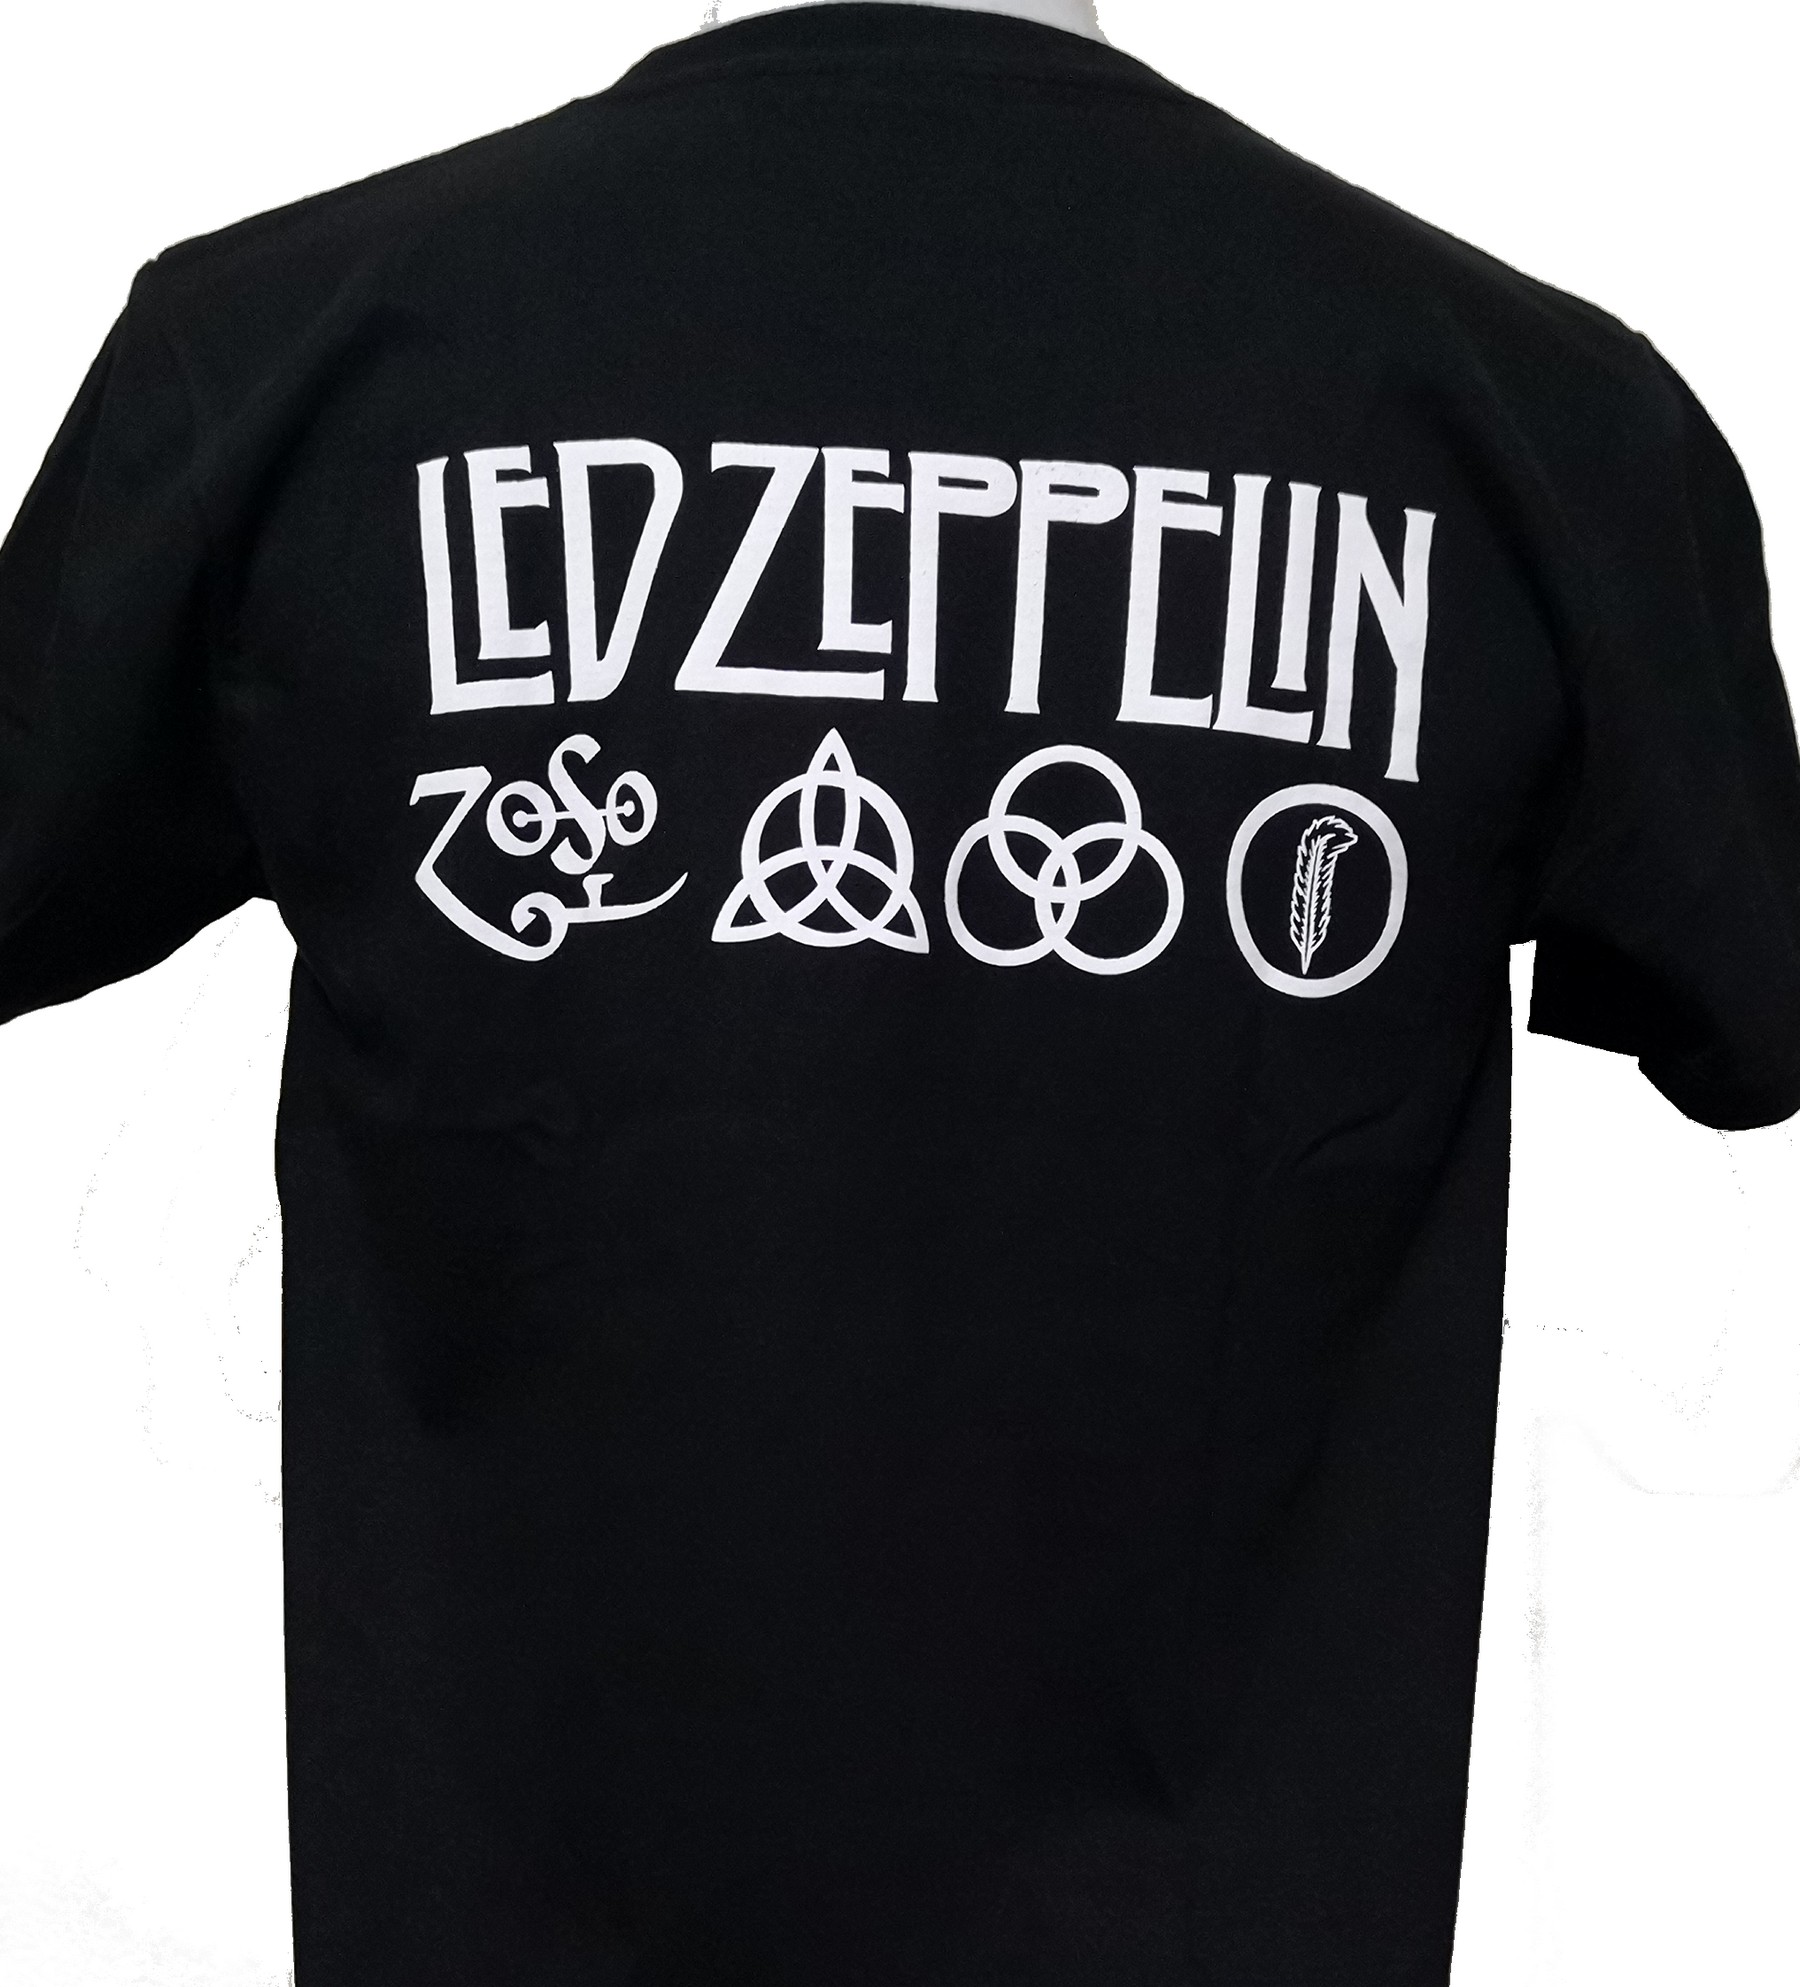 Led Zeppelin t-shirt size S